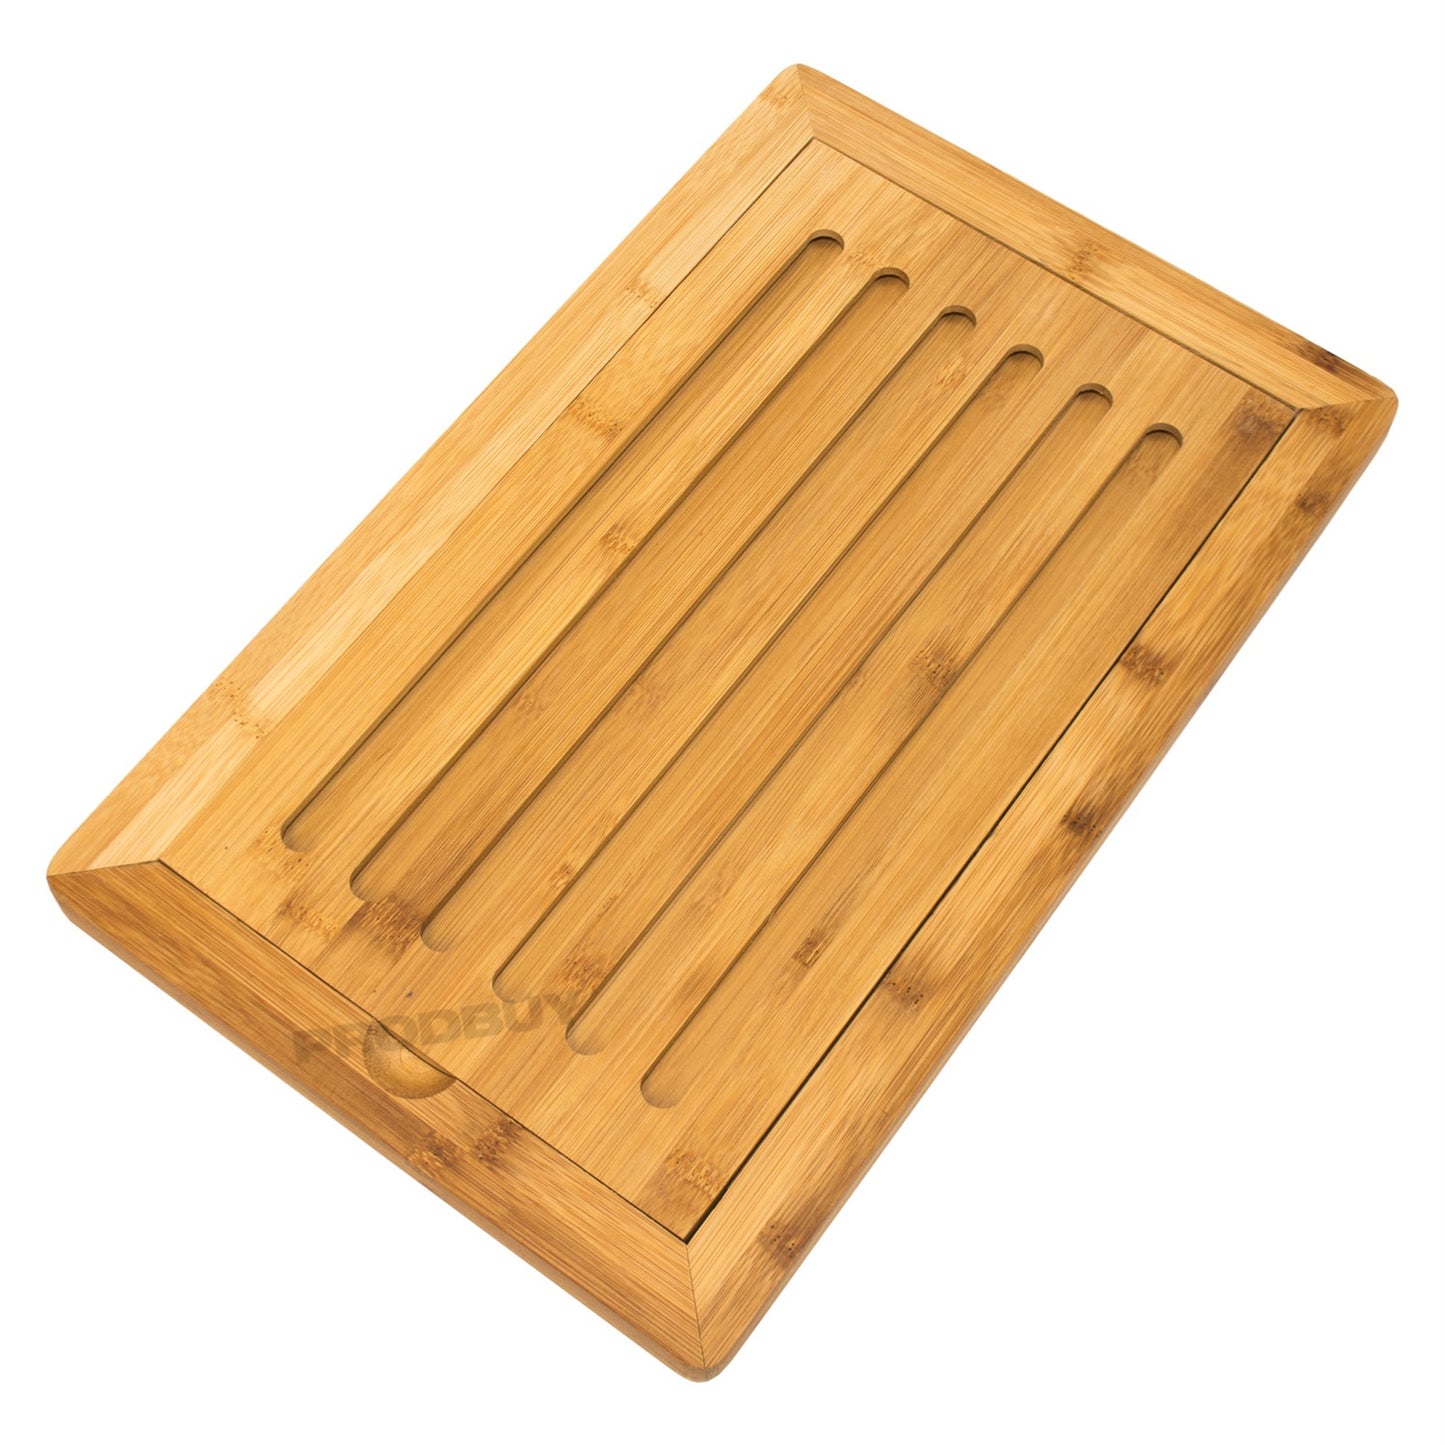 Bamboo Wooden Bread Cutting Board